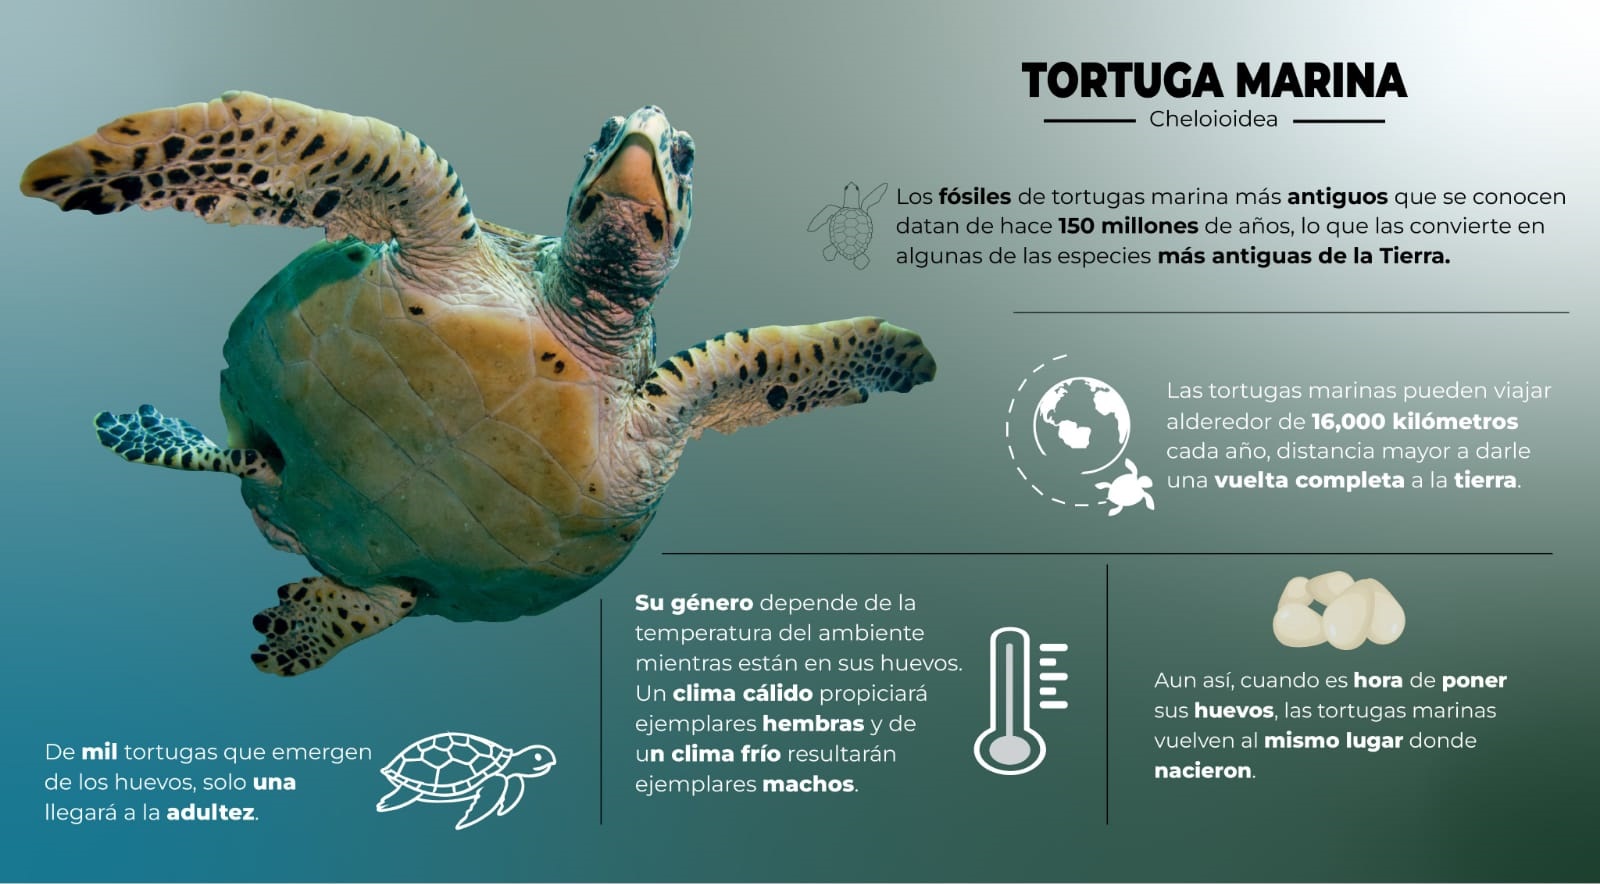 Tortugas 